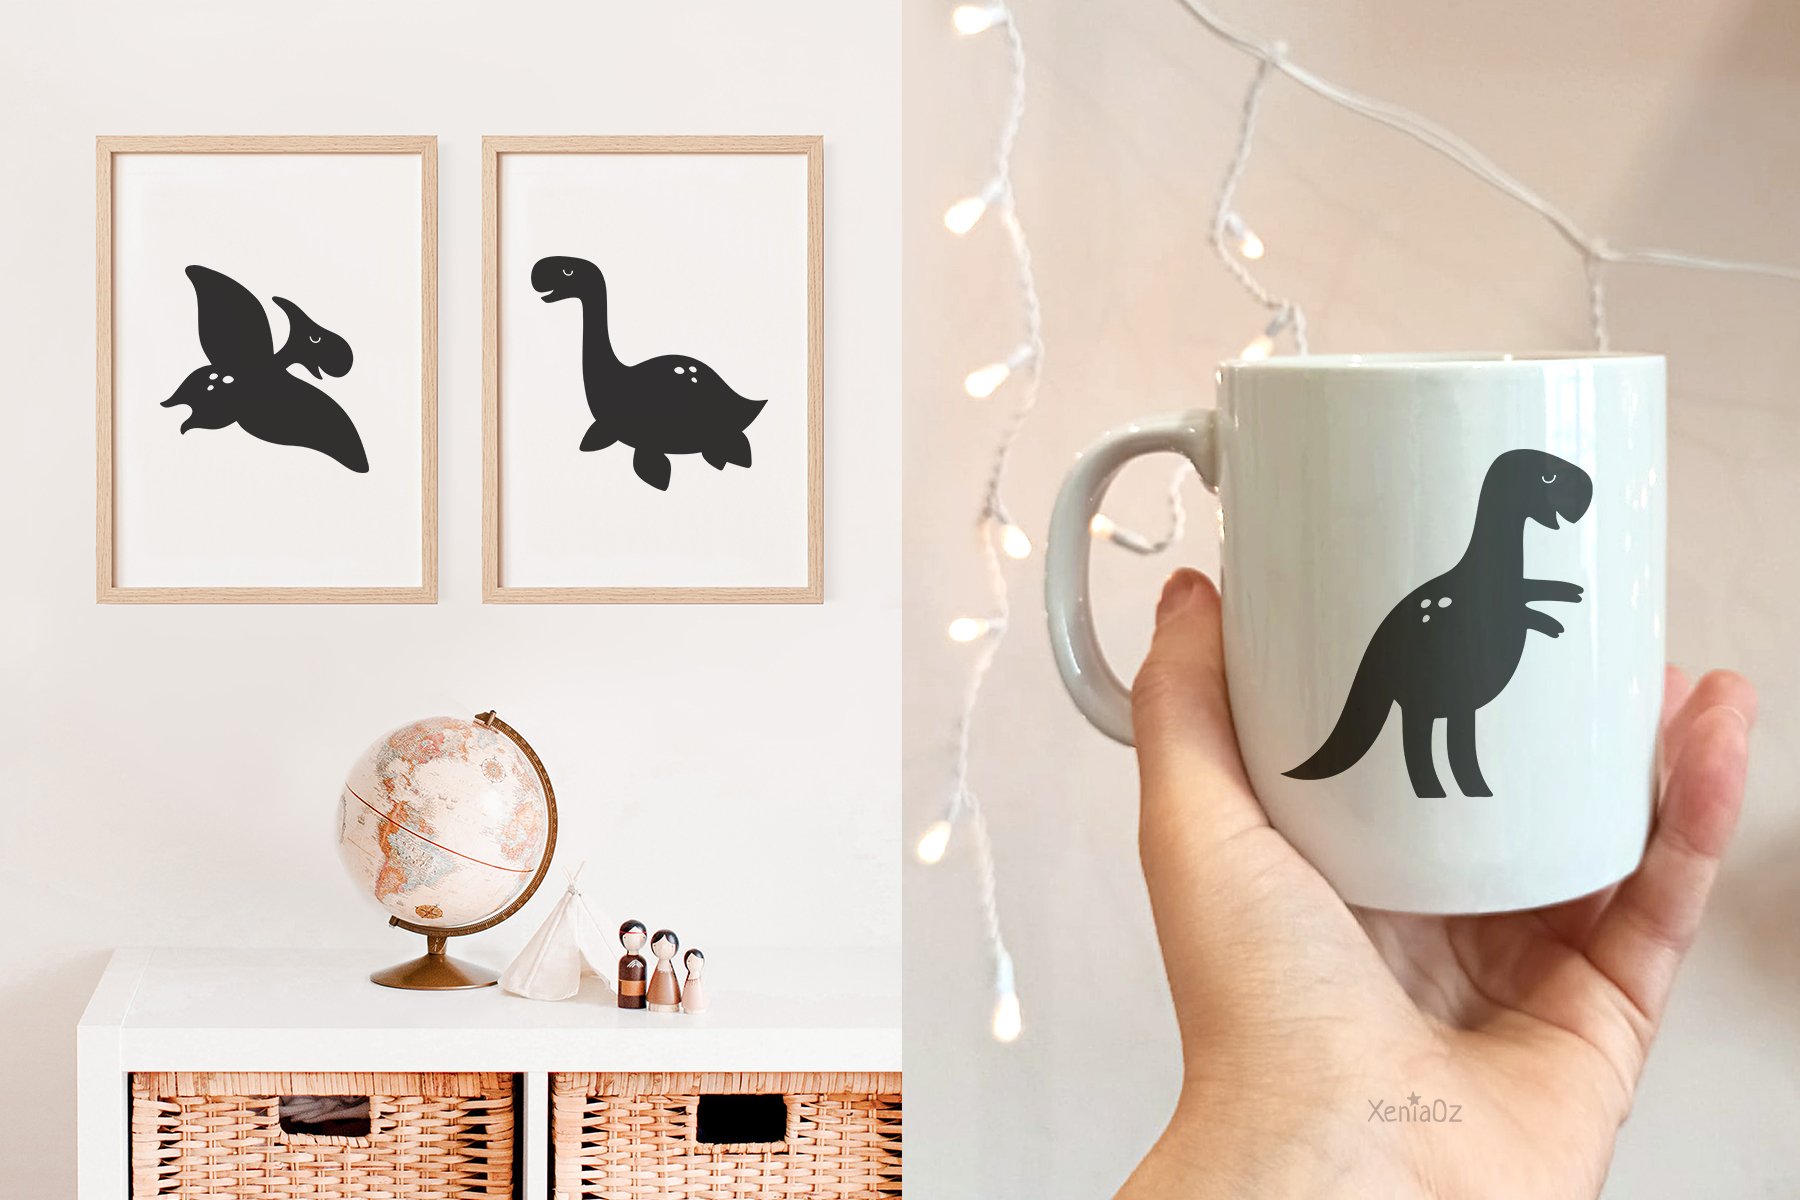 Dinosaur SVG, Dinosaur Silhouette Clipart, Cute Dino Cricut.